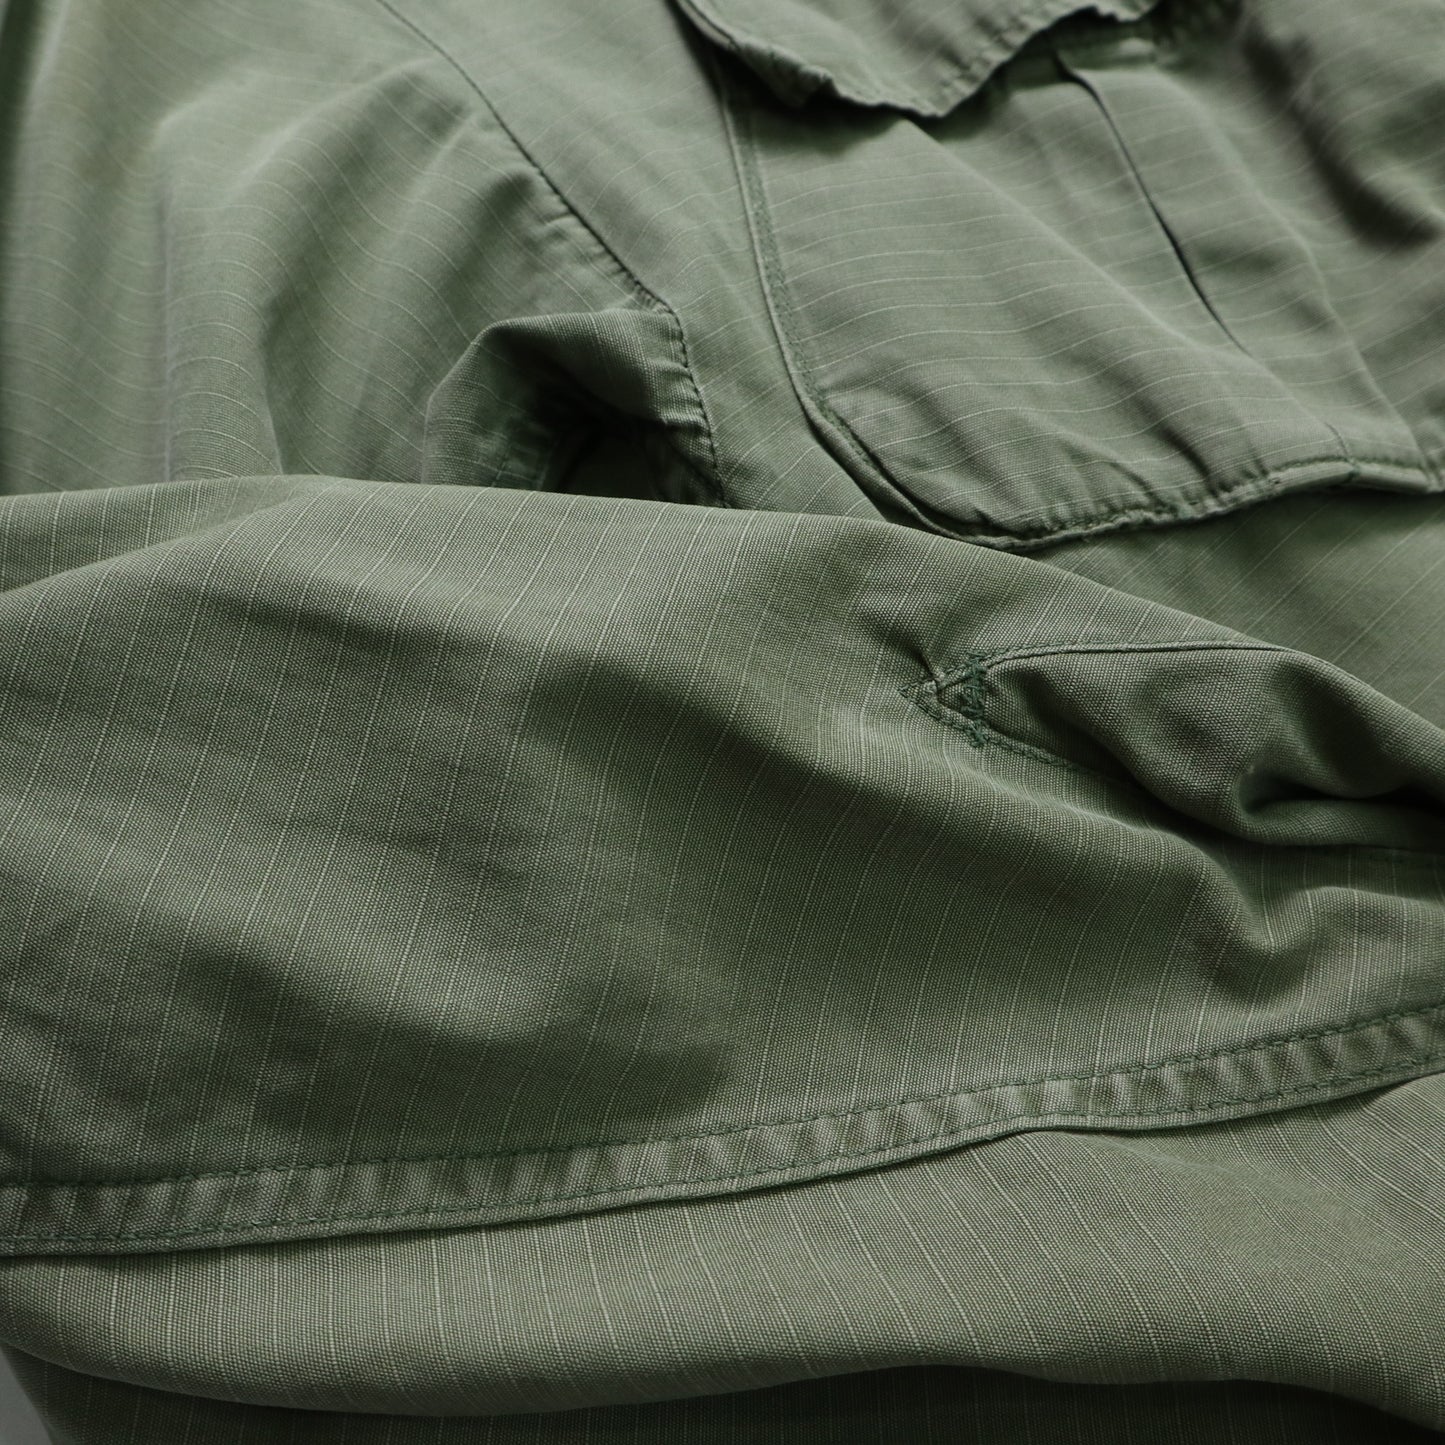 60s US Army jungle jacket US Army issued Vietnam War diagonal pocket field jacket